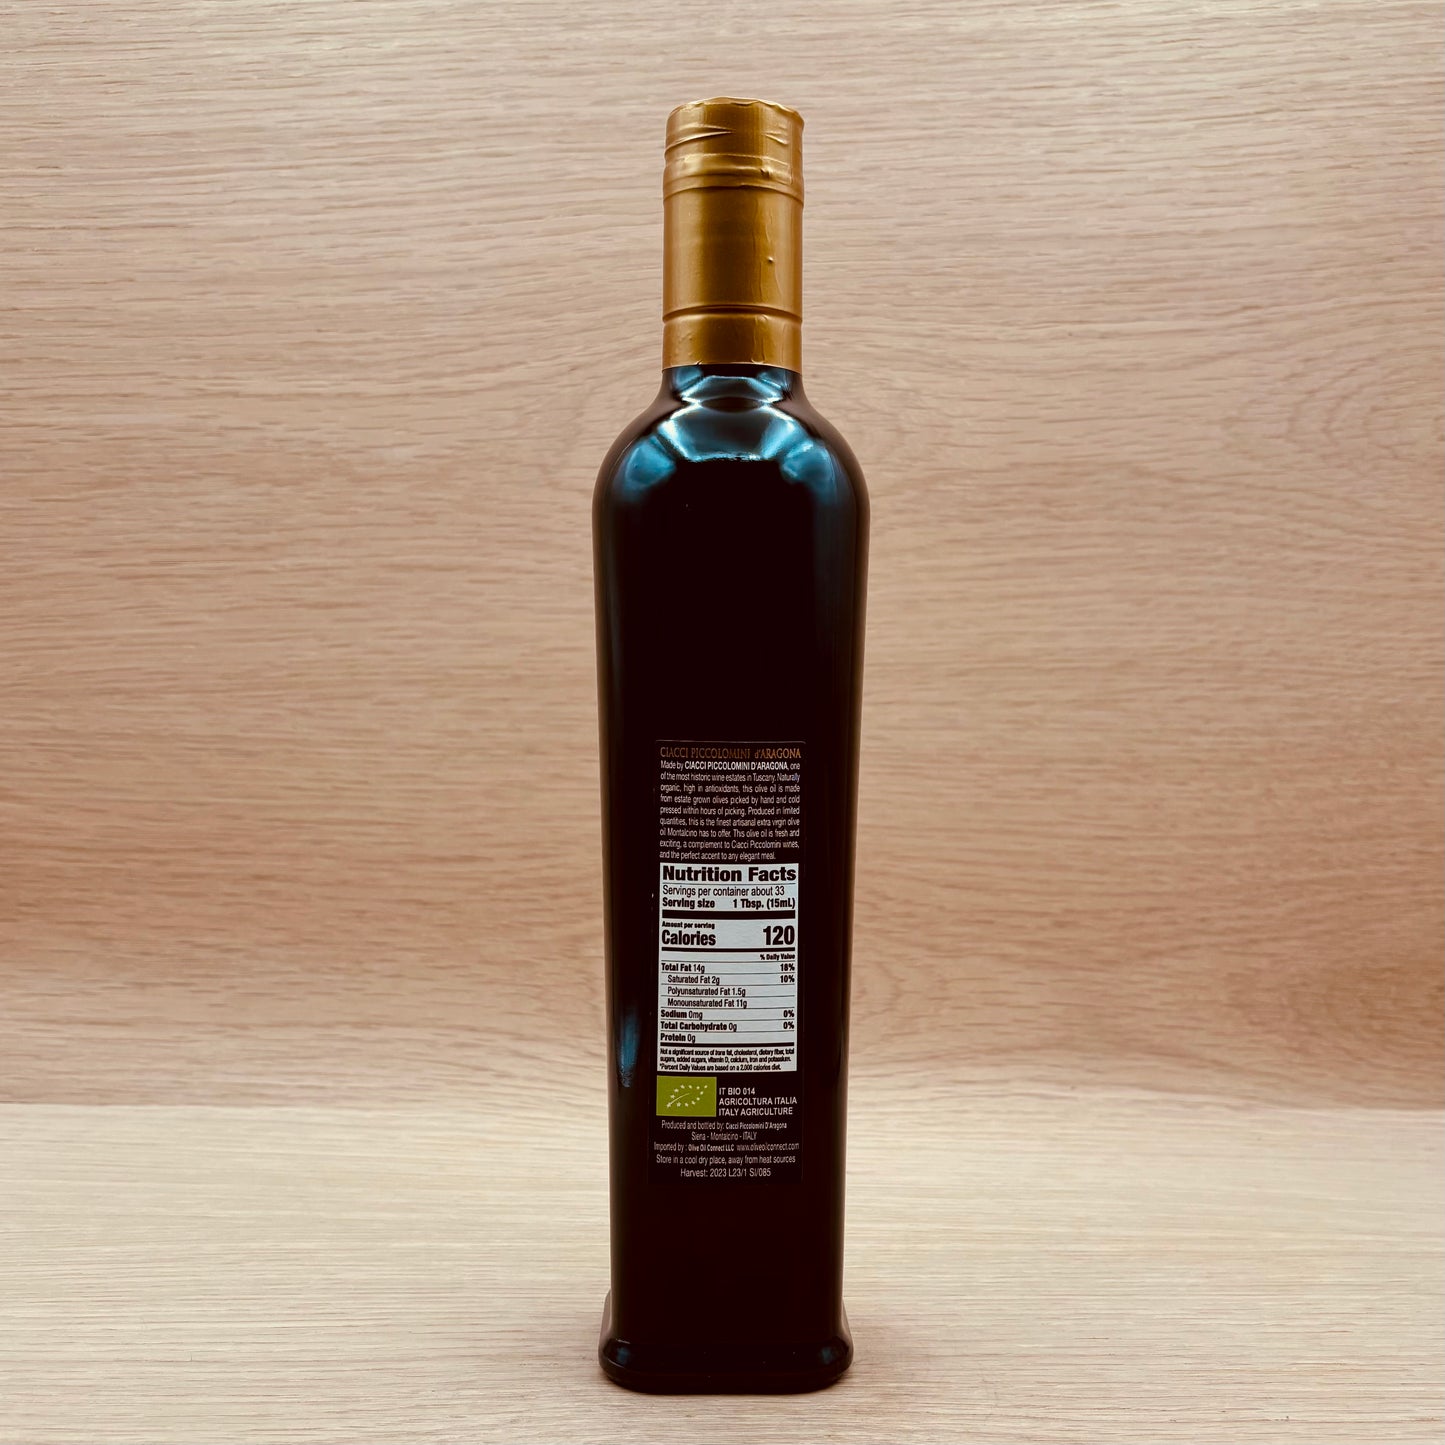 Ciacci Piccolomini d'Aragona, Italy, Extra Virgin Olive Oil, 2023